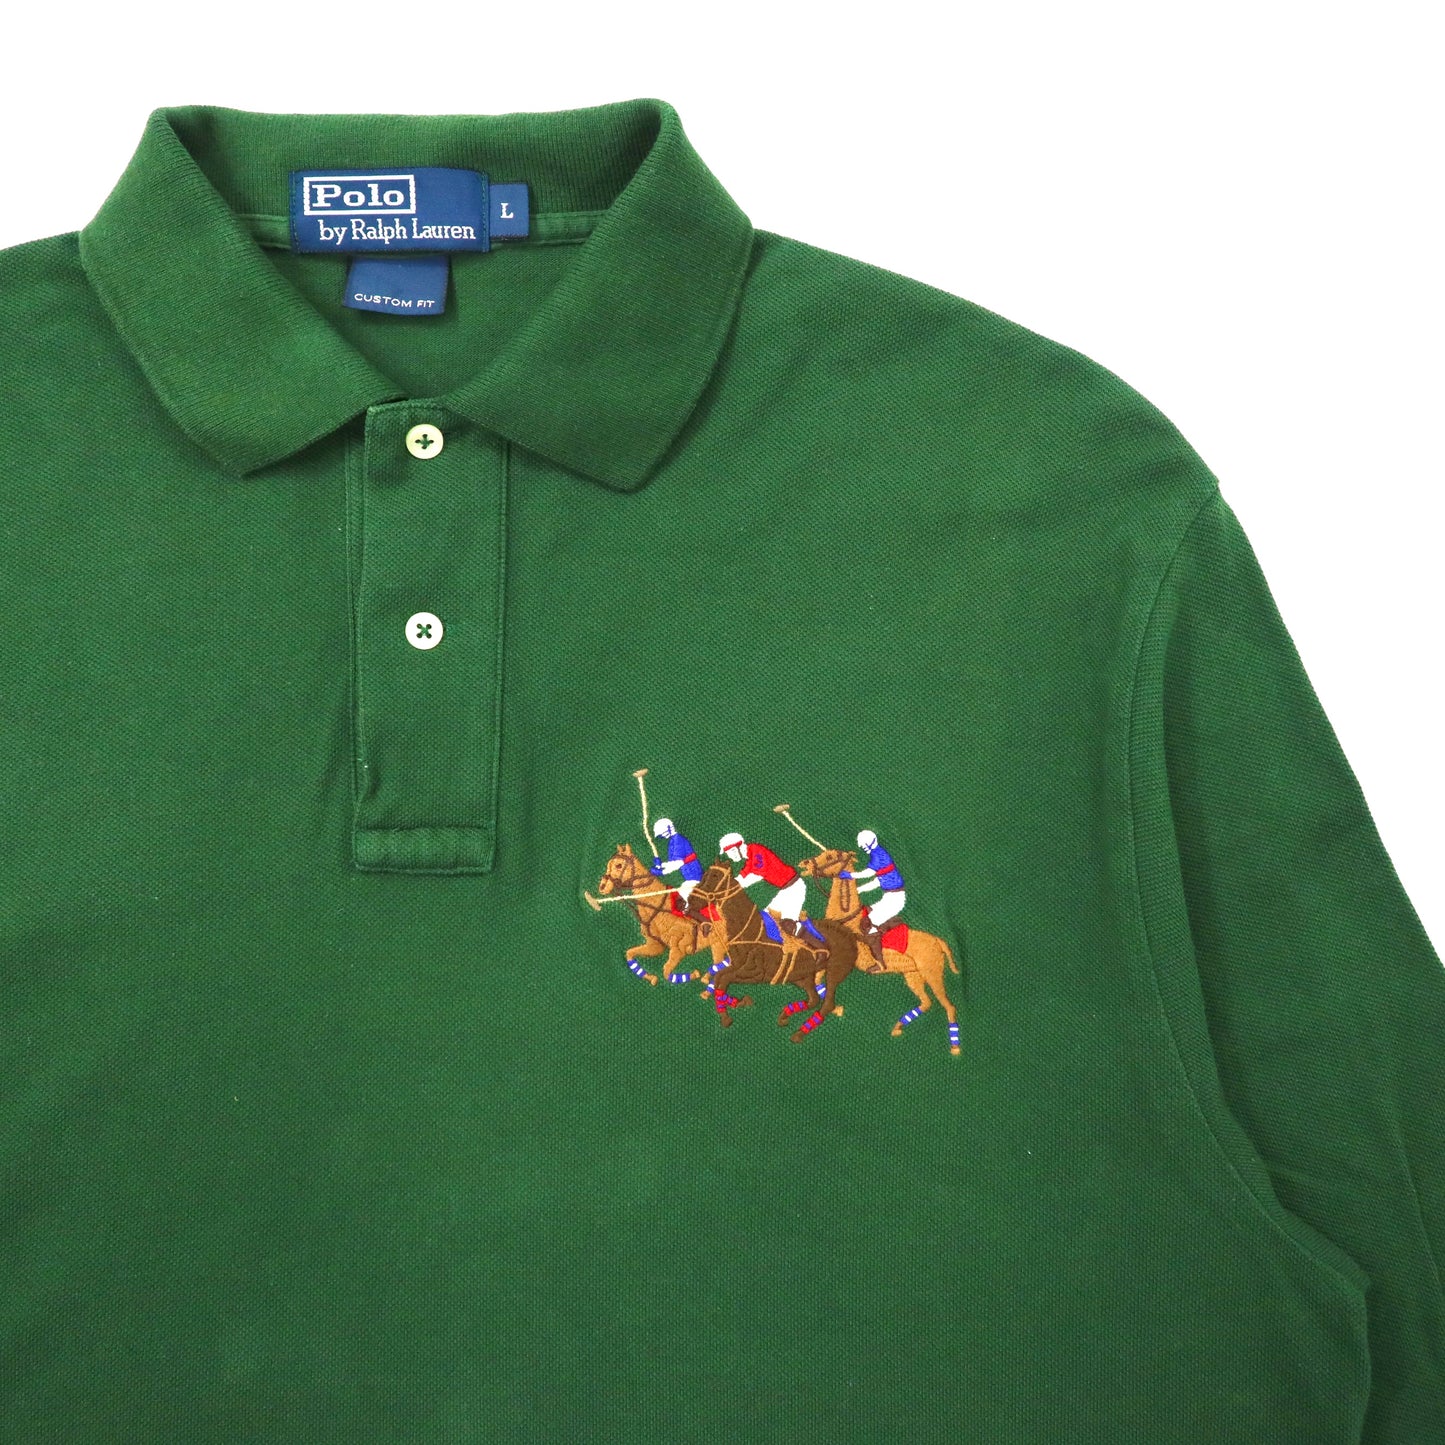 Polo by Ralph Lauren ラガーシャツ L グリーン コットン CUSTOM FIT ビッグポニー刺繍 ナンバリング